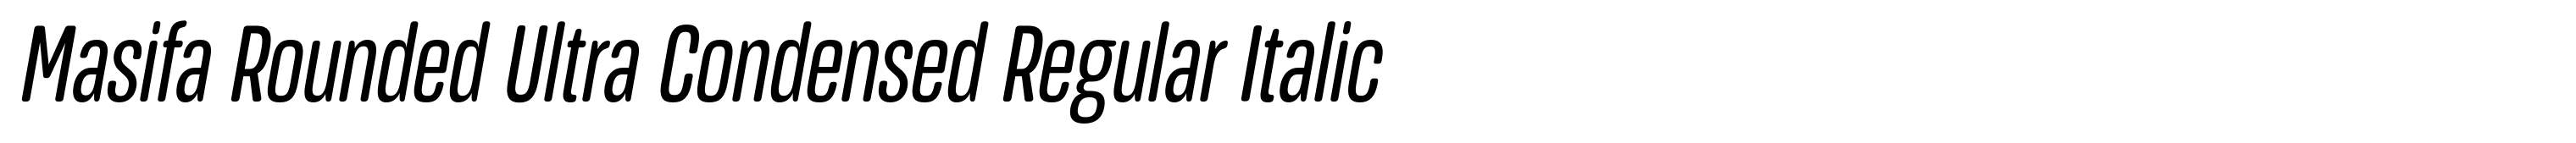 Masifa Rounded Ultra Condensed Regular Italic